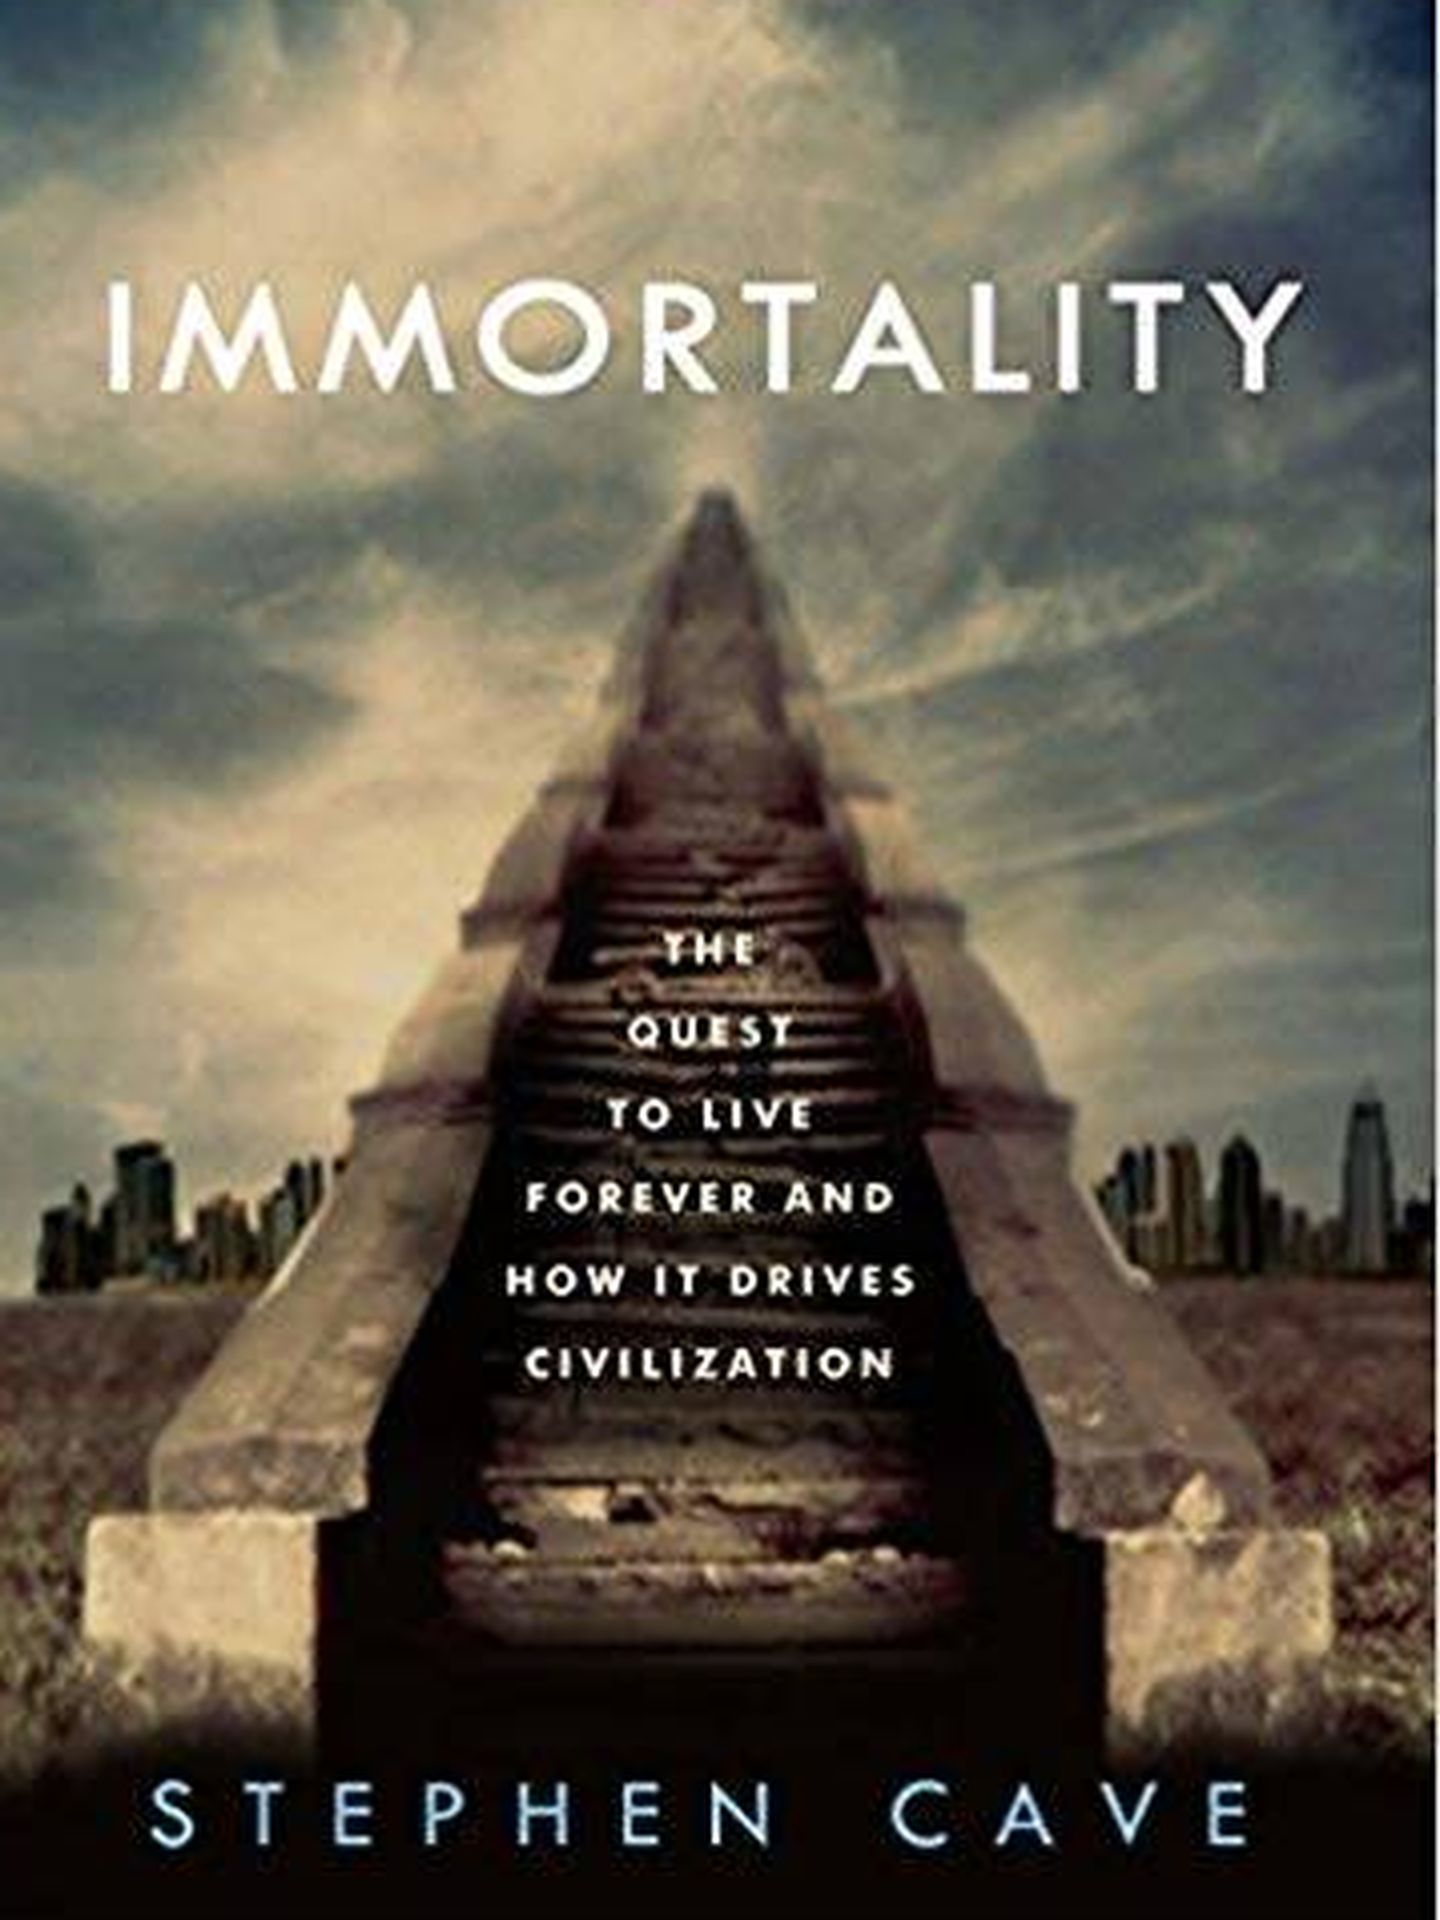 Portada de 'Inmortality', de Stephen Cave. (Amazon)